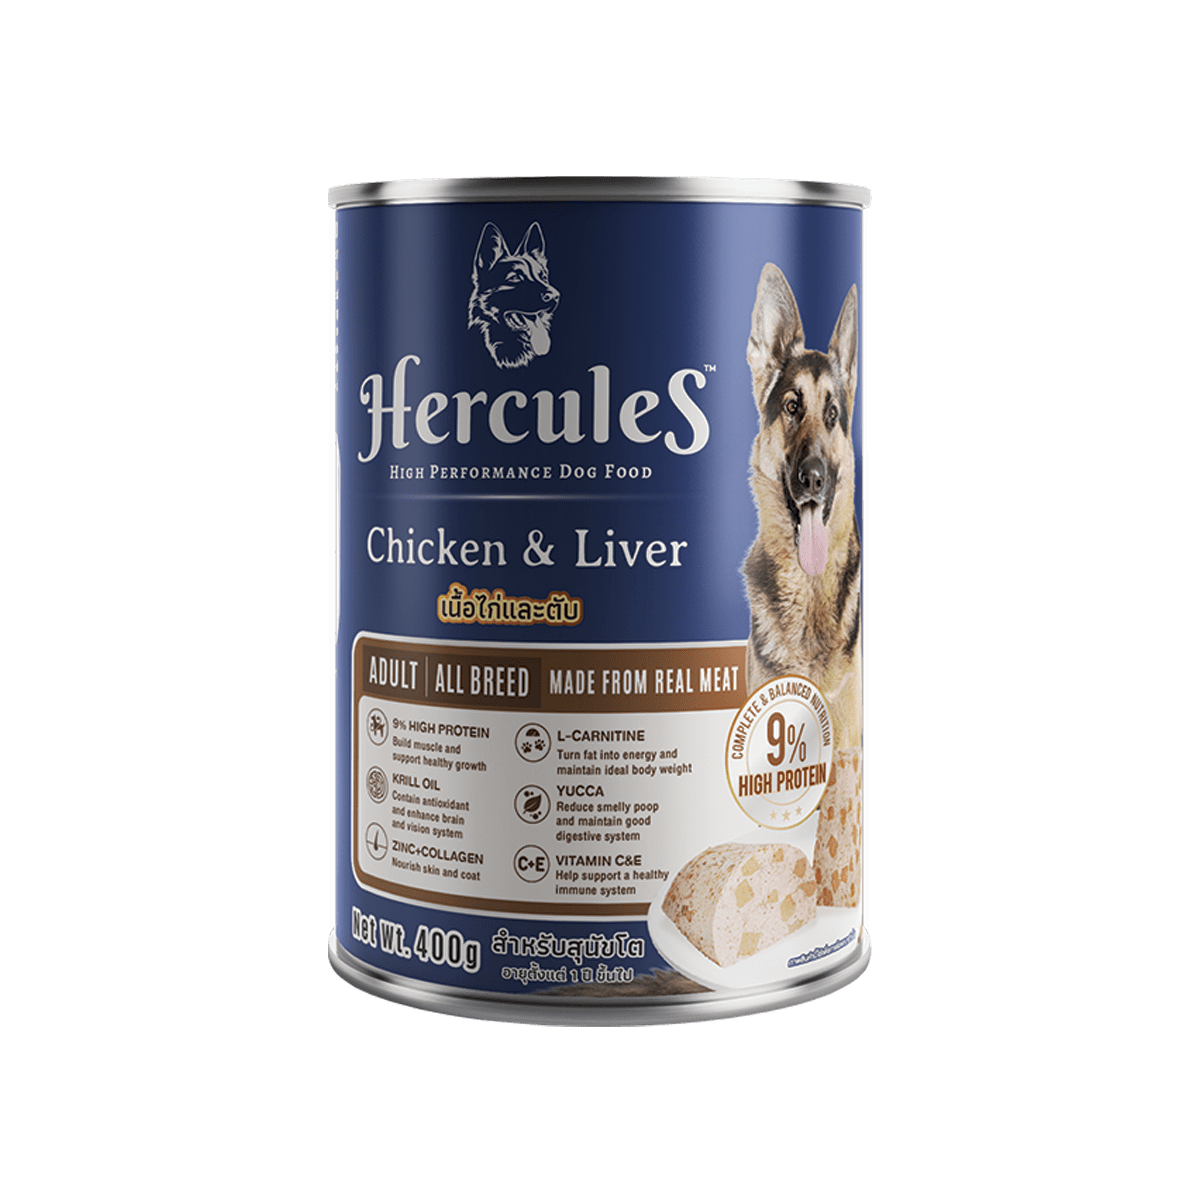 Hercules chicken breed